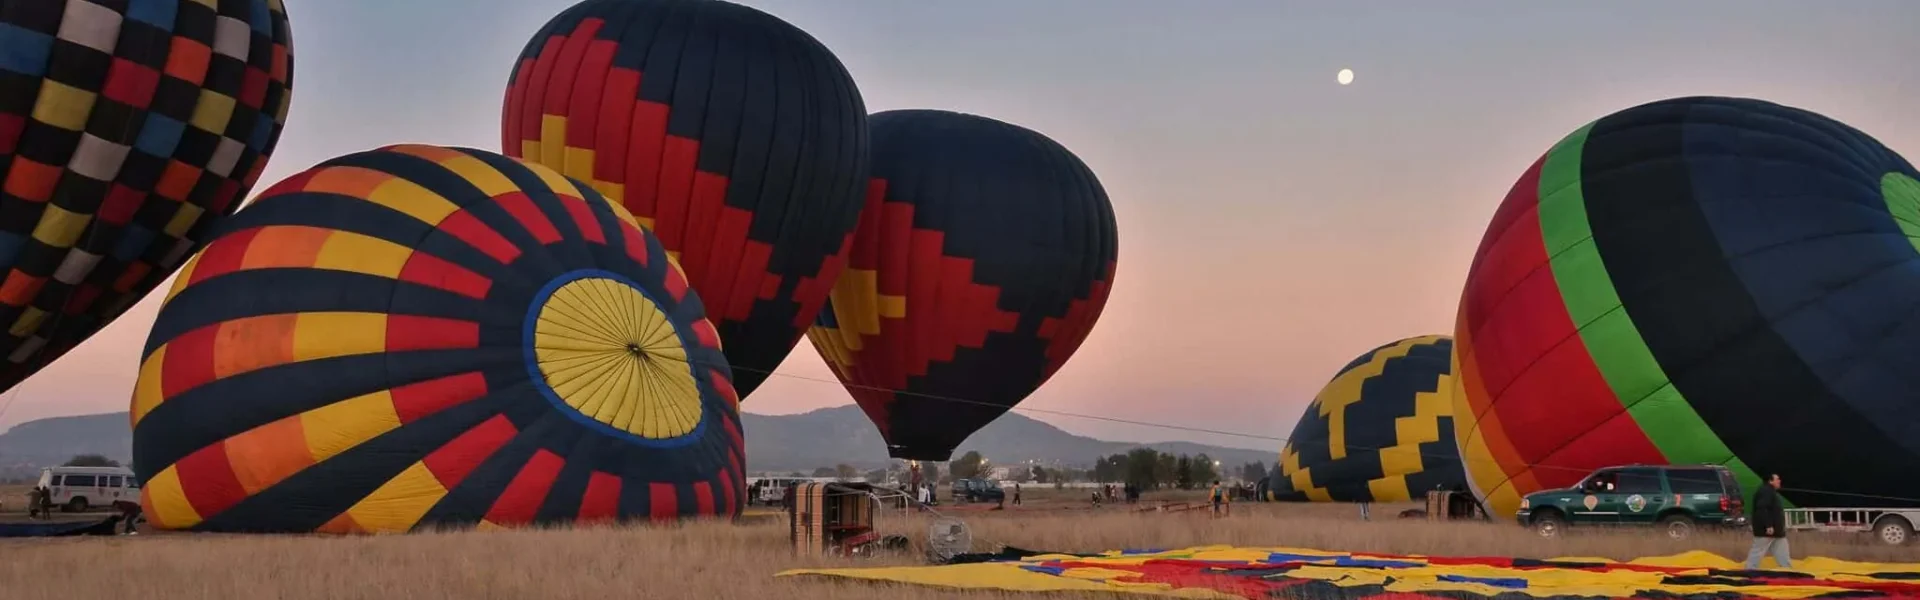 foto de globos aerostaticos en Tequisquiapan Querétaro Mexico Expeditions Travel Platform